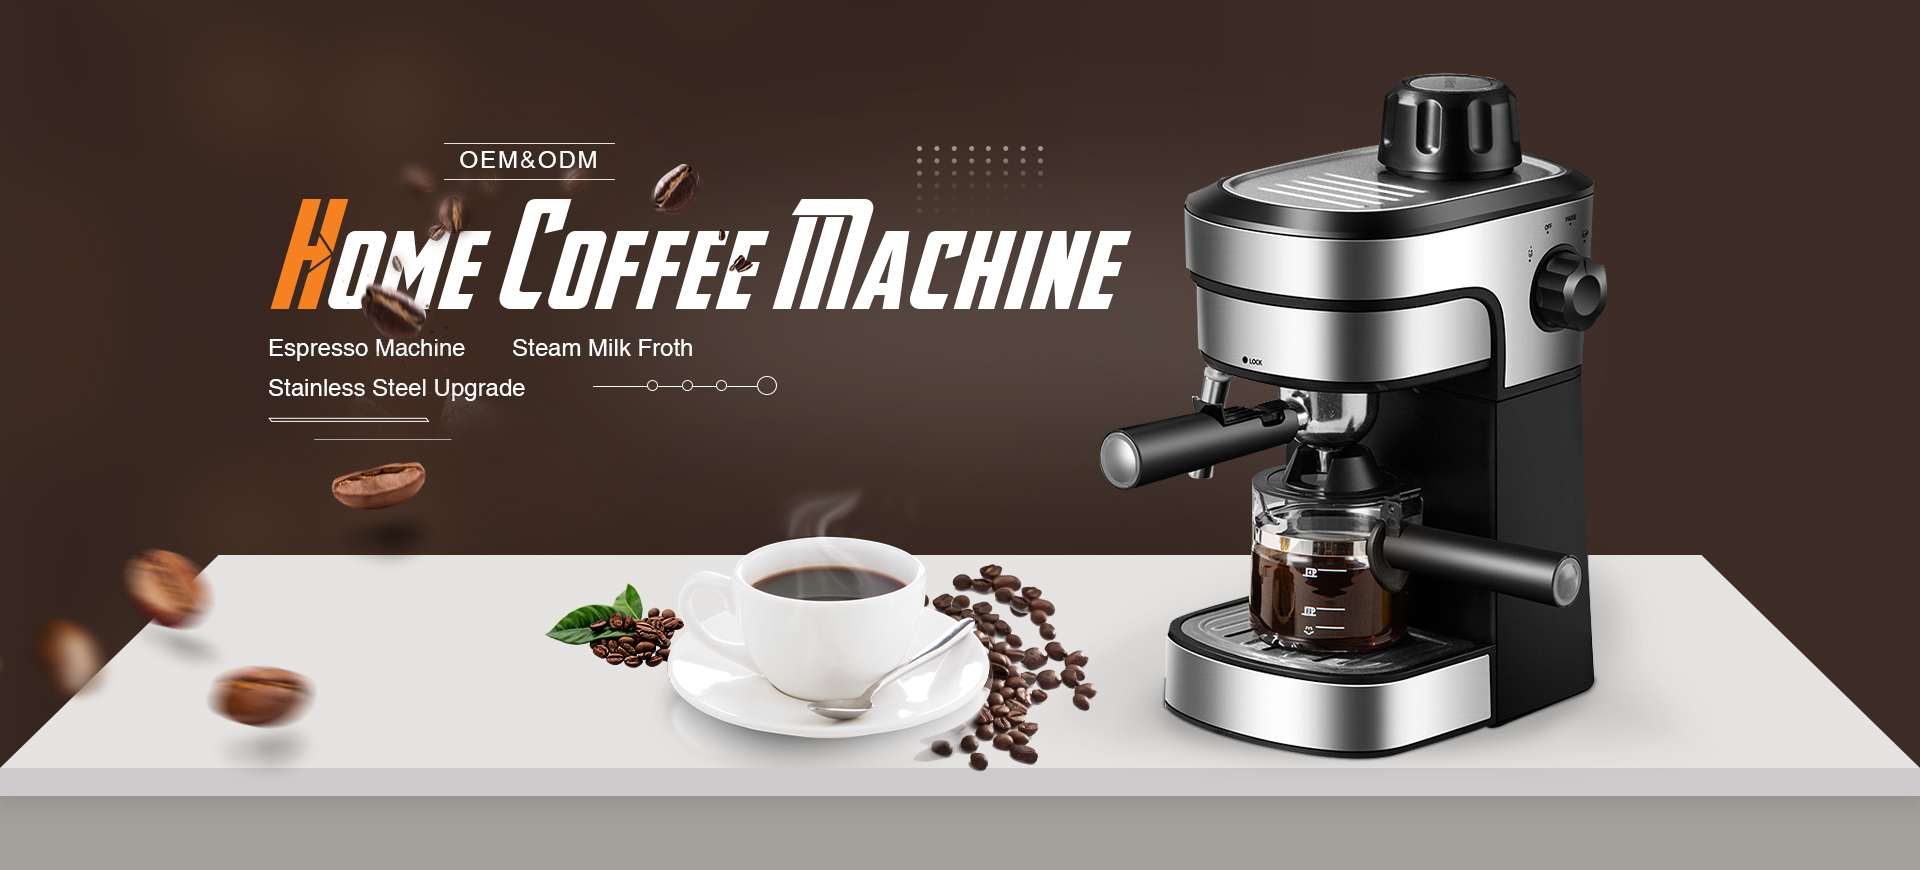 Best Home Coffee Machine